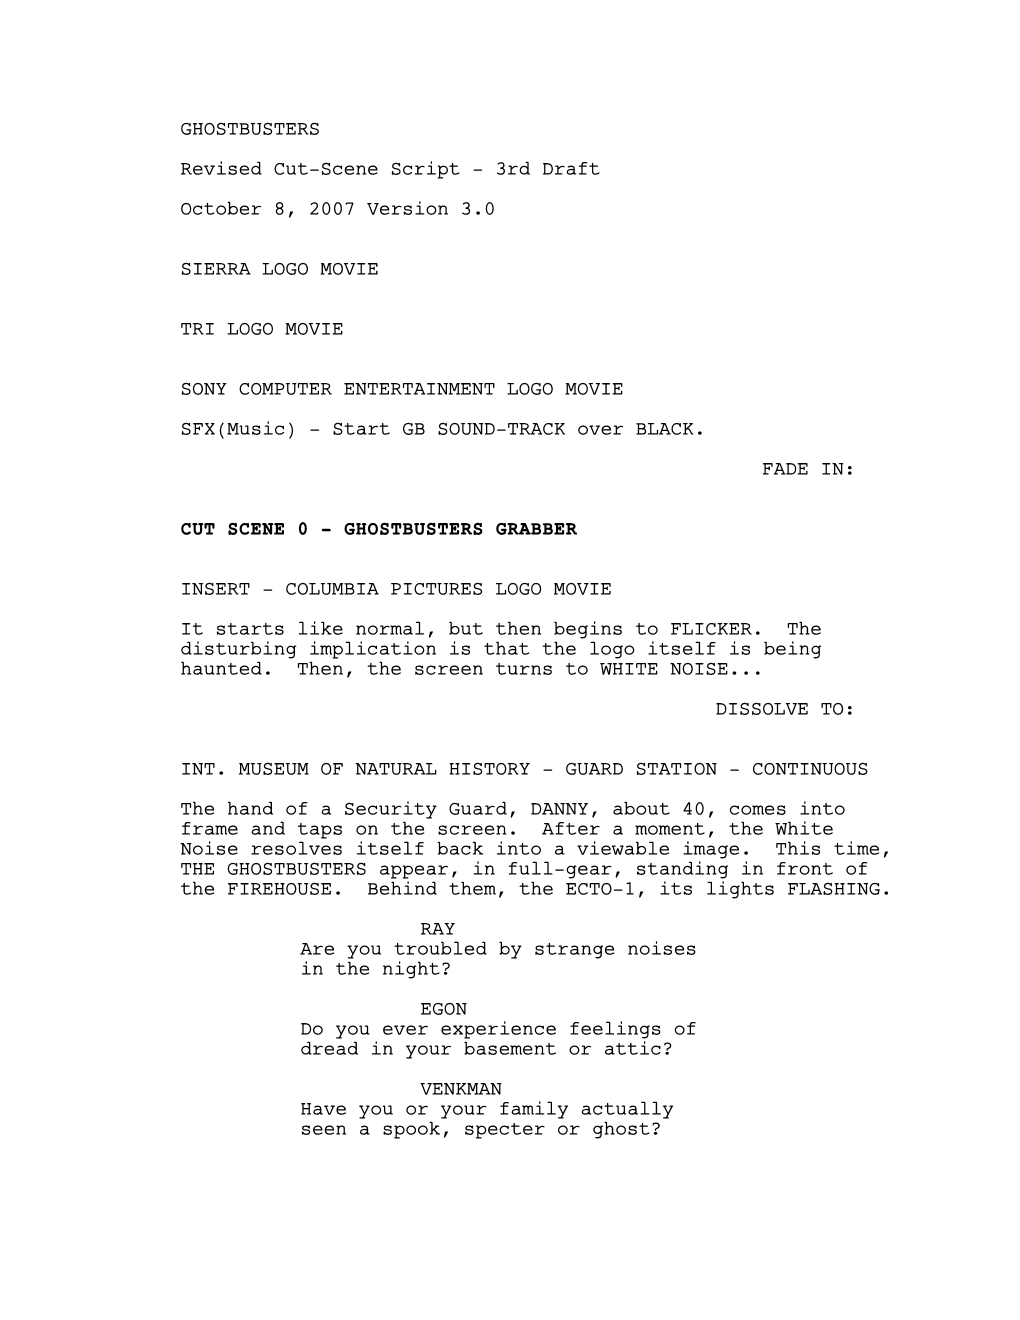 GHOSTBUSTERS Revised Cut-Scene Script - 3Rd Draft October 8, 2007 Version 3.0